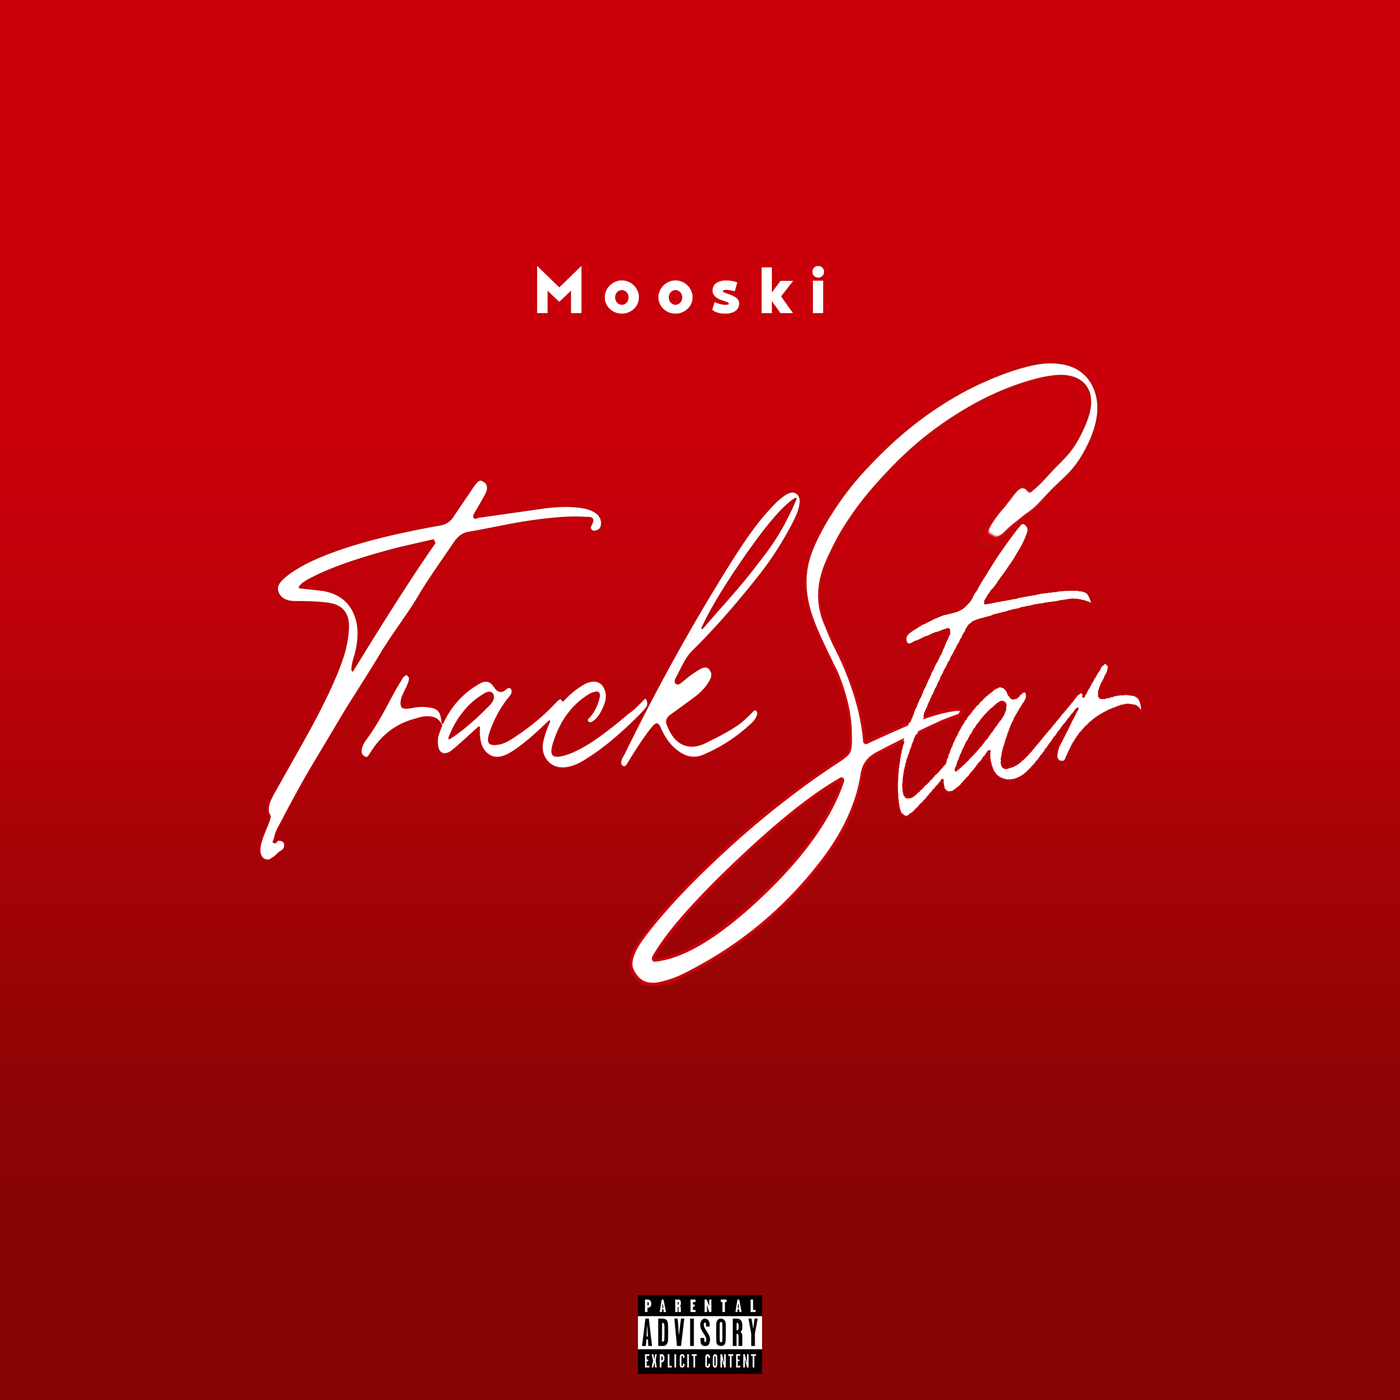 Ladda ner Mooski - Track Star